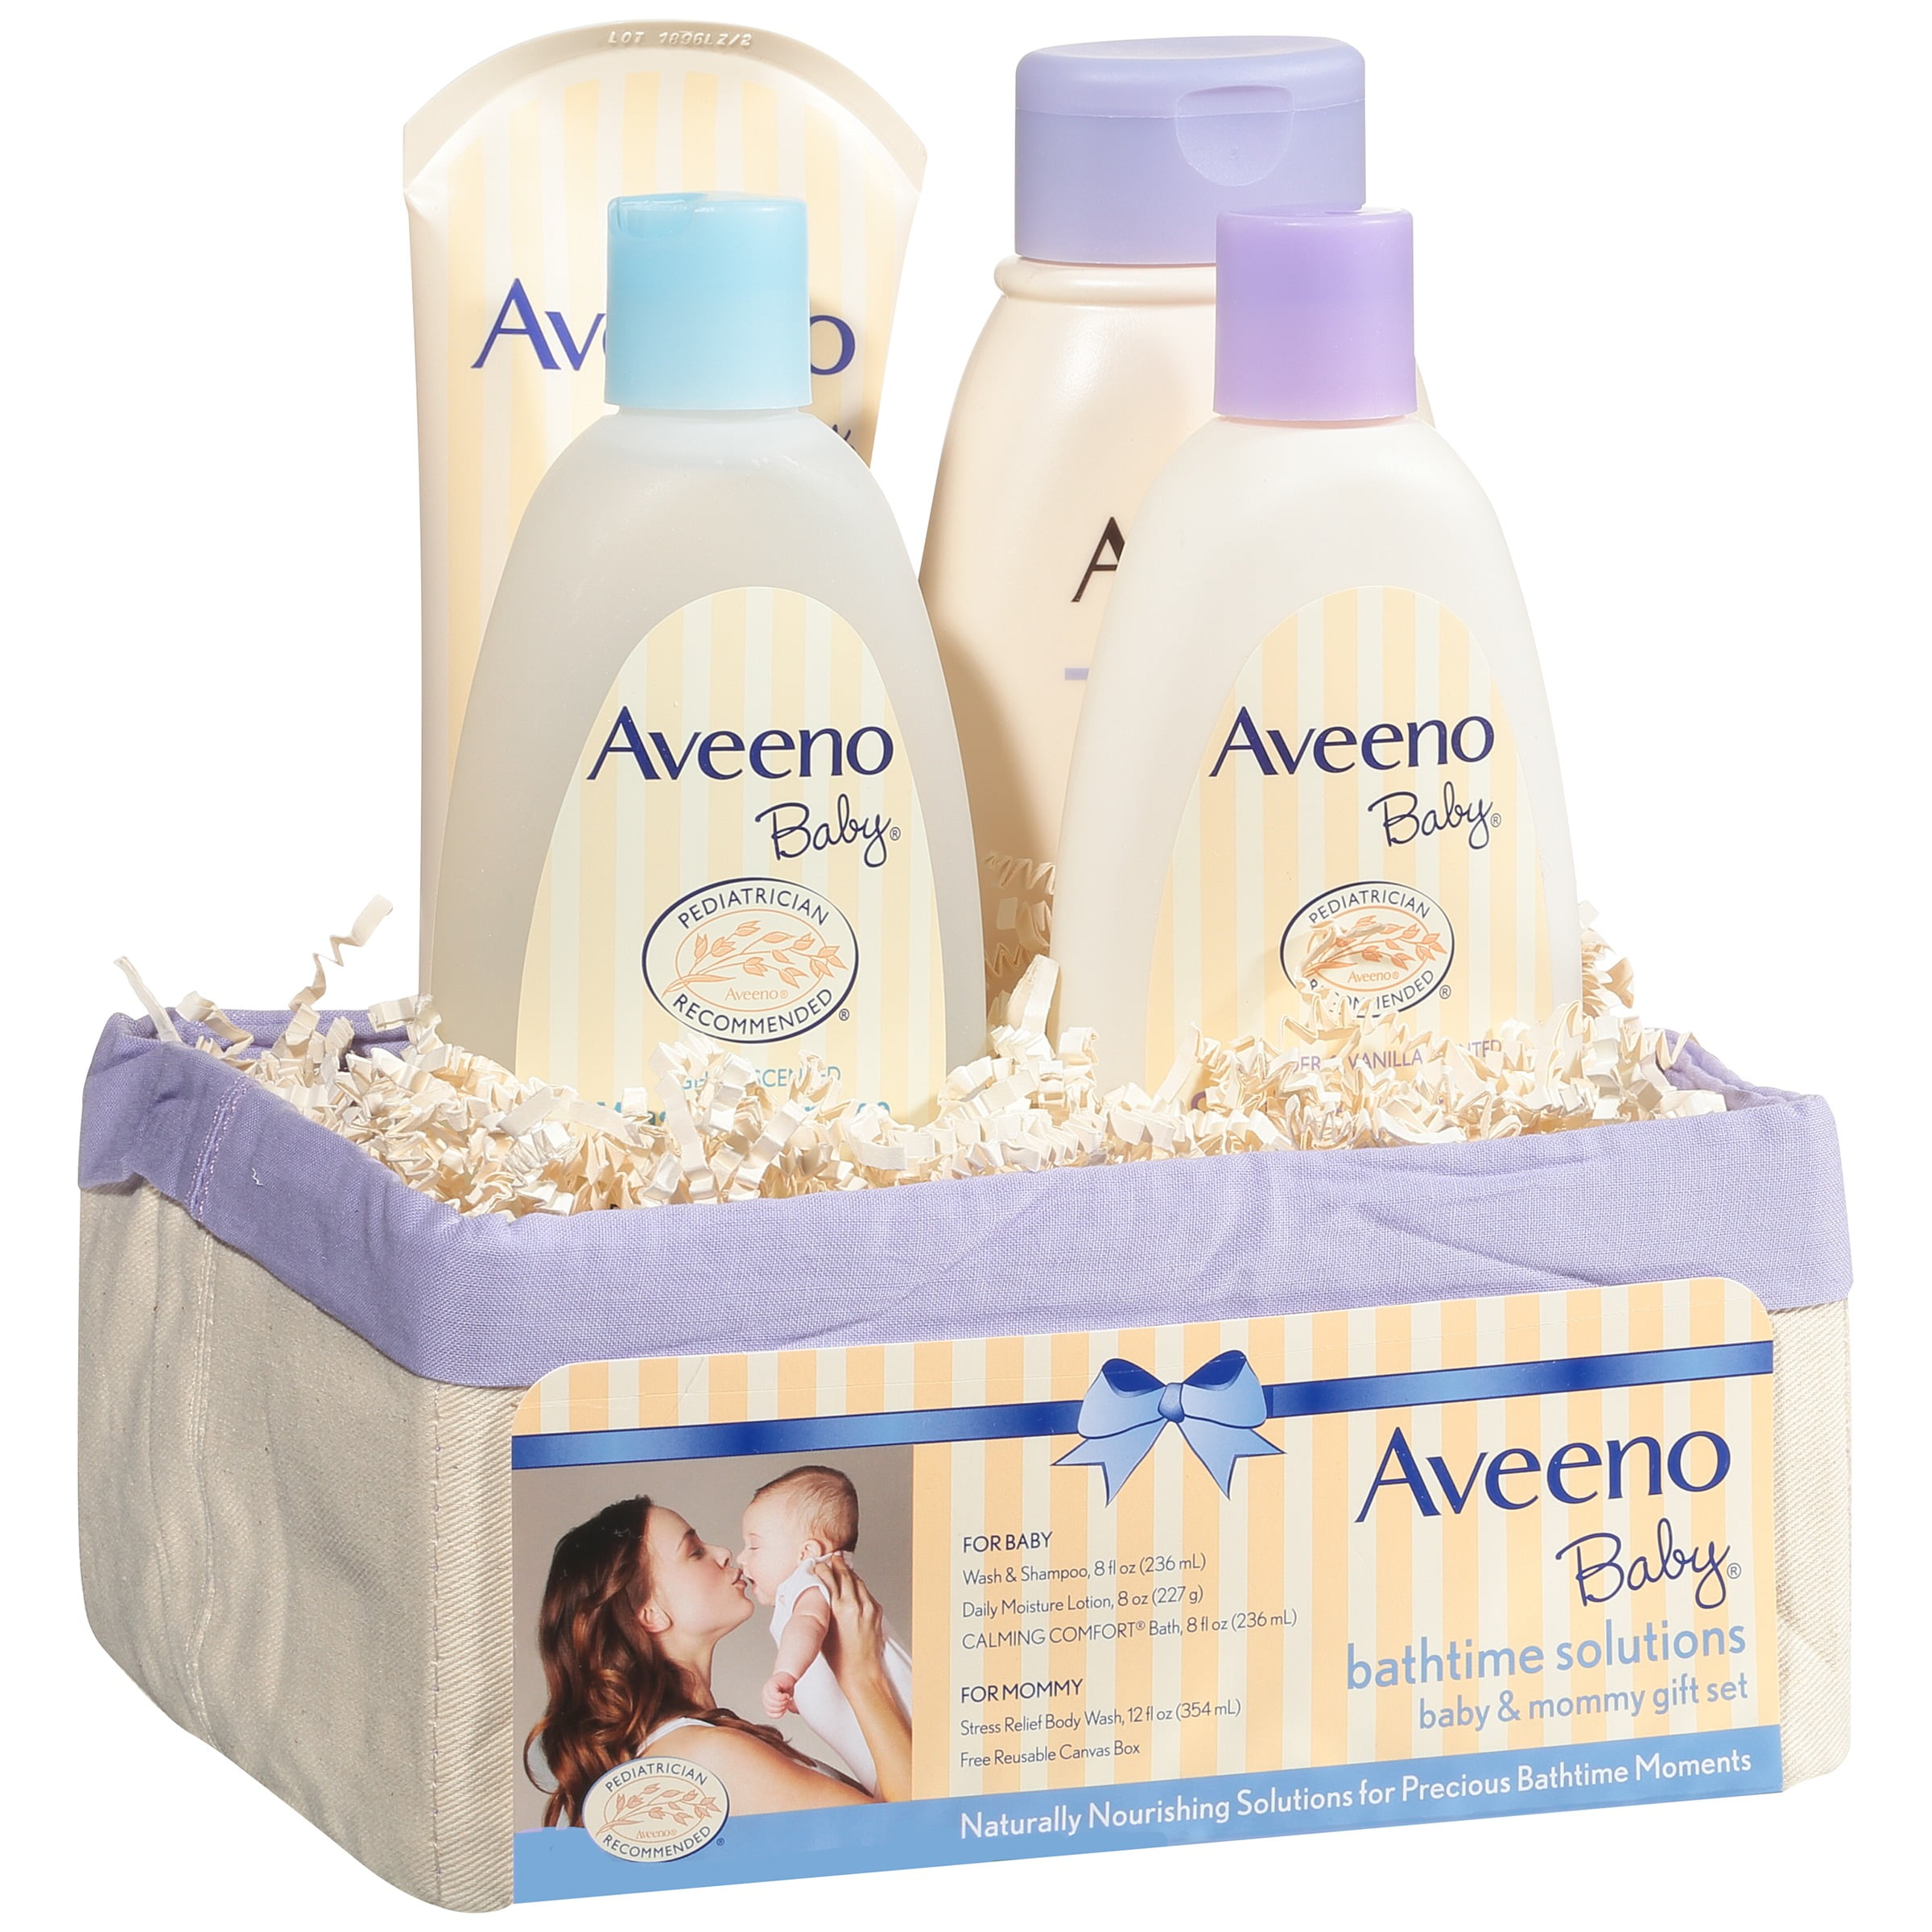 Aveeno Baby Daily Bathtime Solutions 